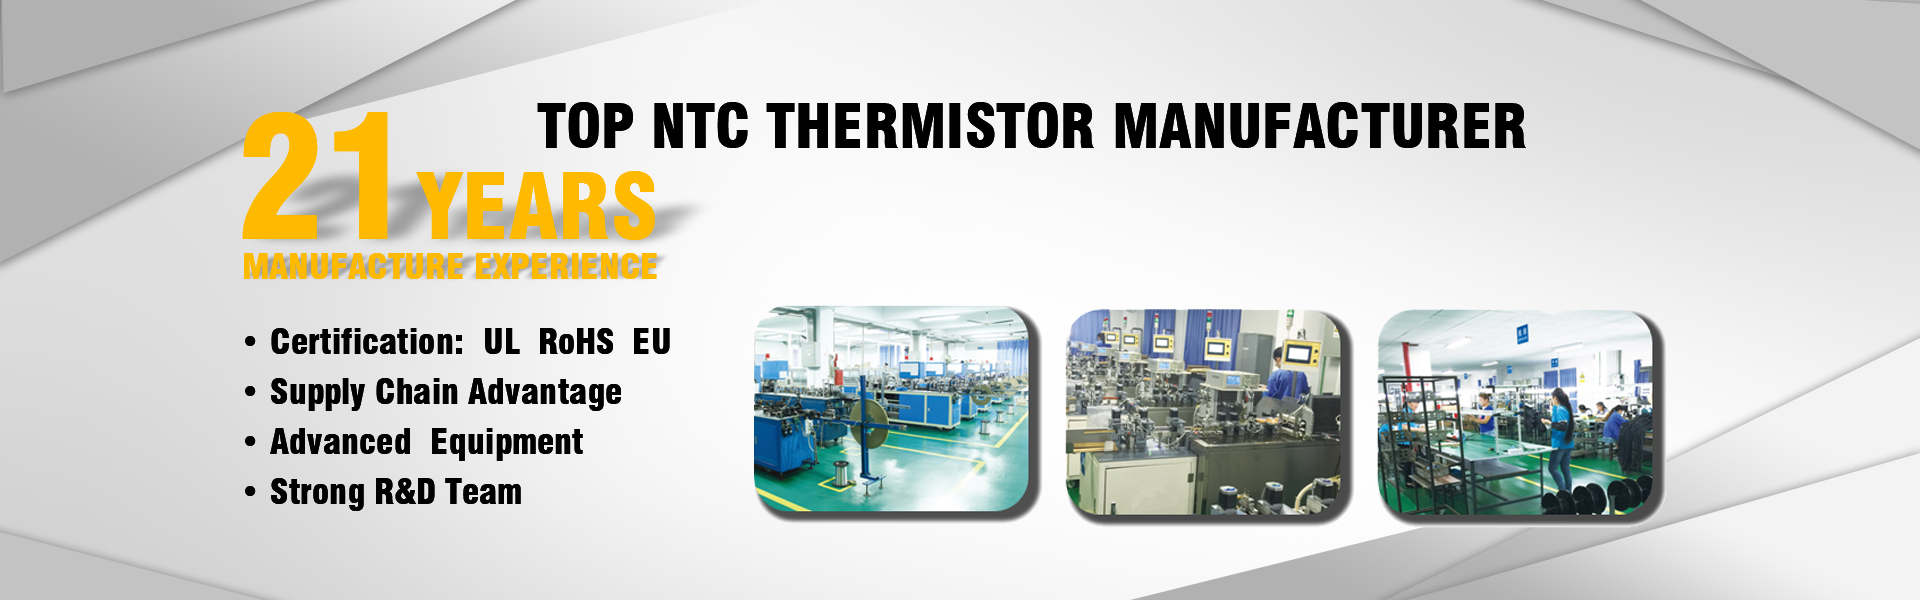 Fabricante de termistores NTC, sensor de temperatura, alta precisão,GUANGDONG XINSHIHENG TECHNOLOGY CO.,LTD